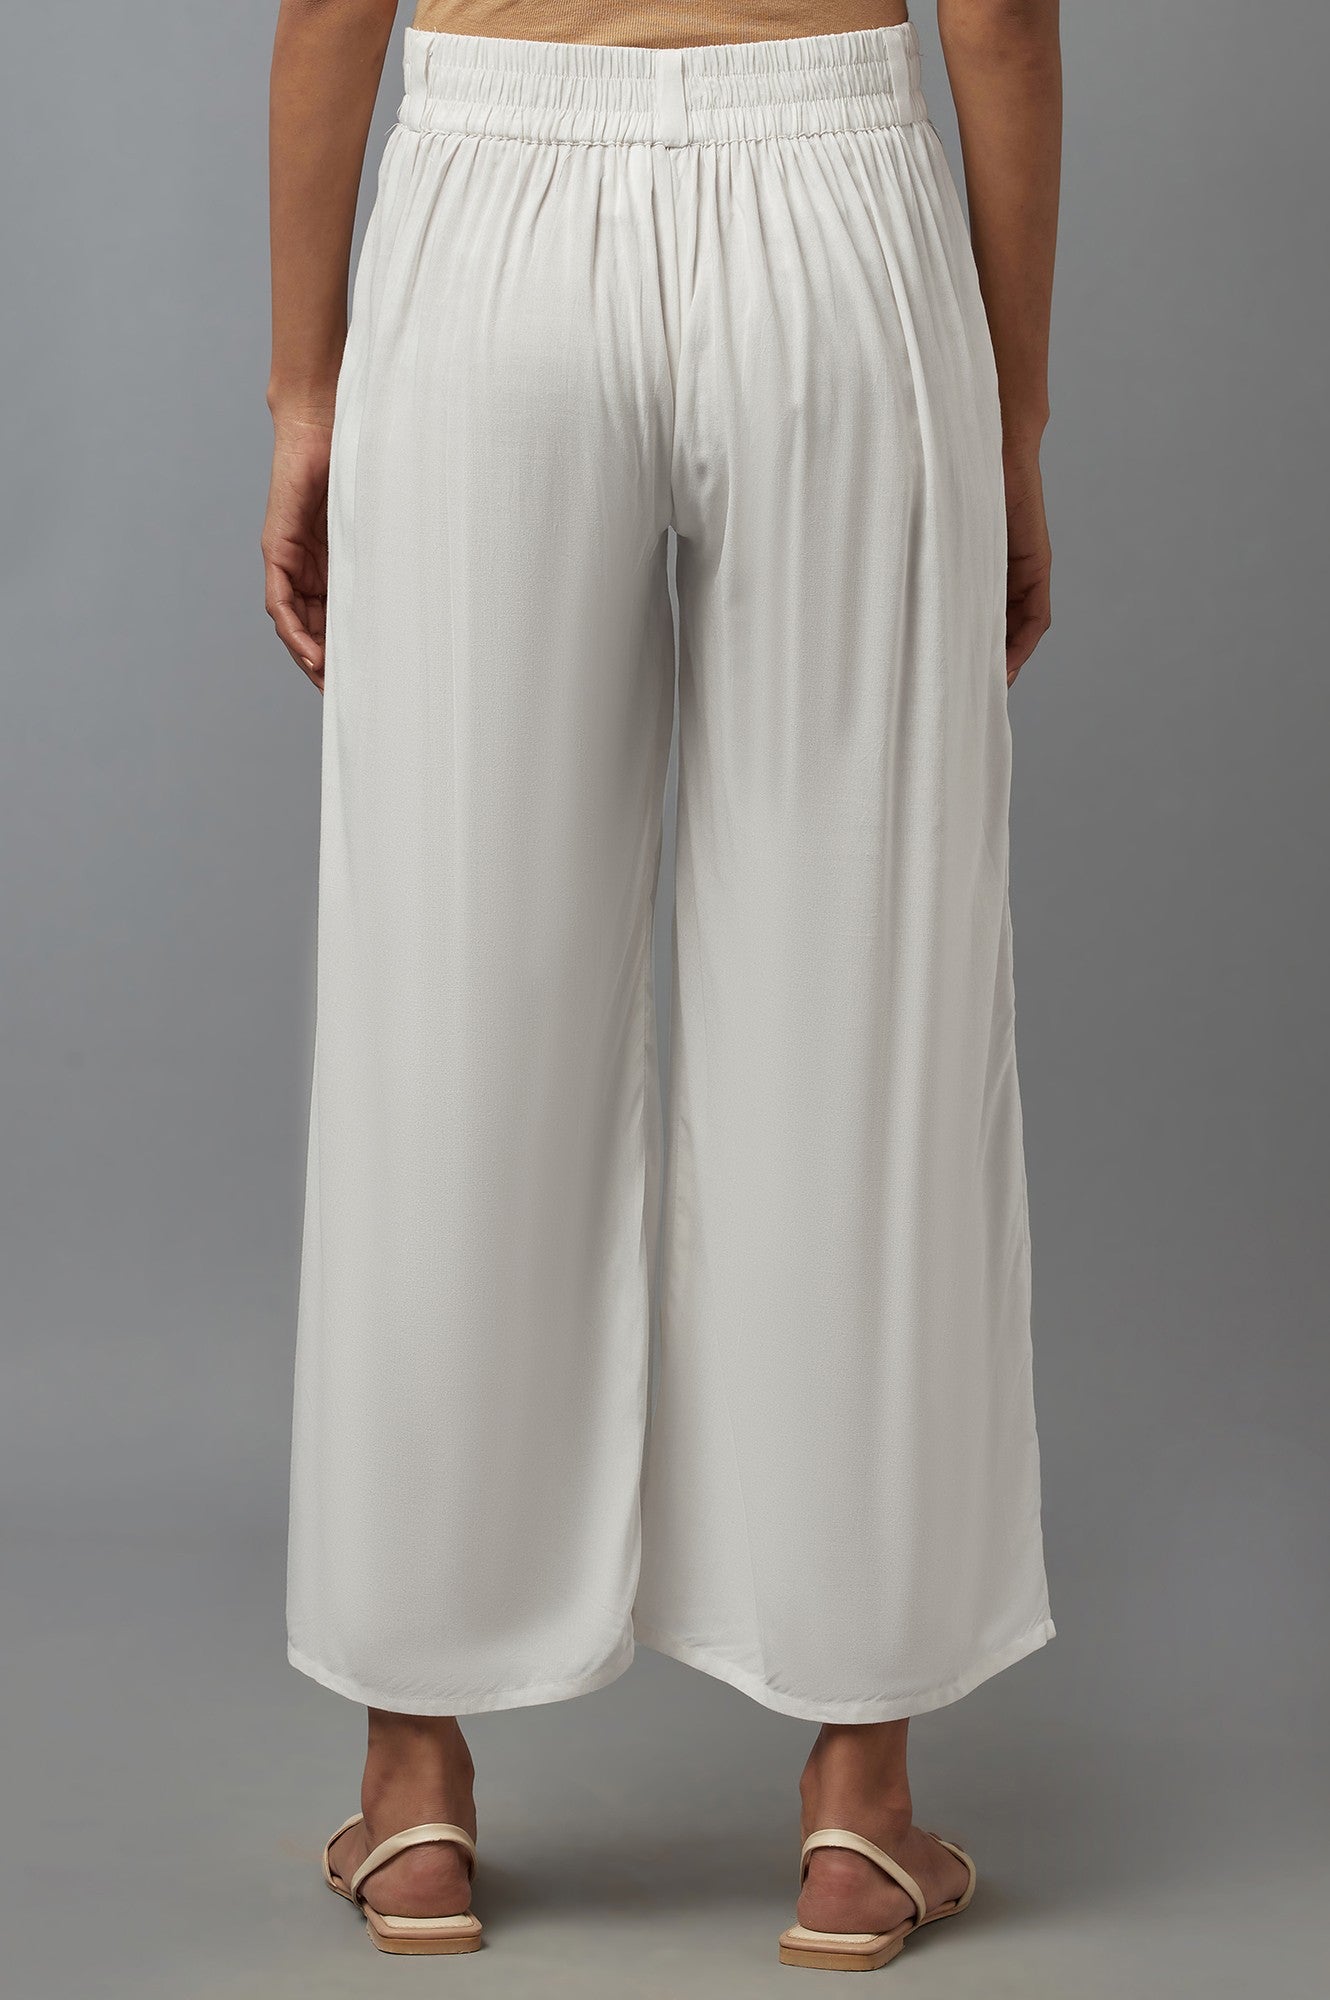 White Tailored Volume Pants